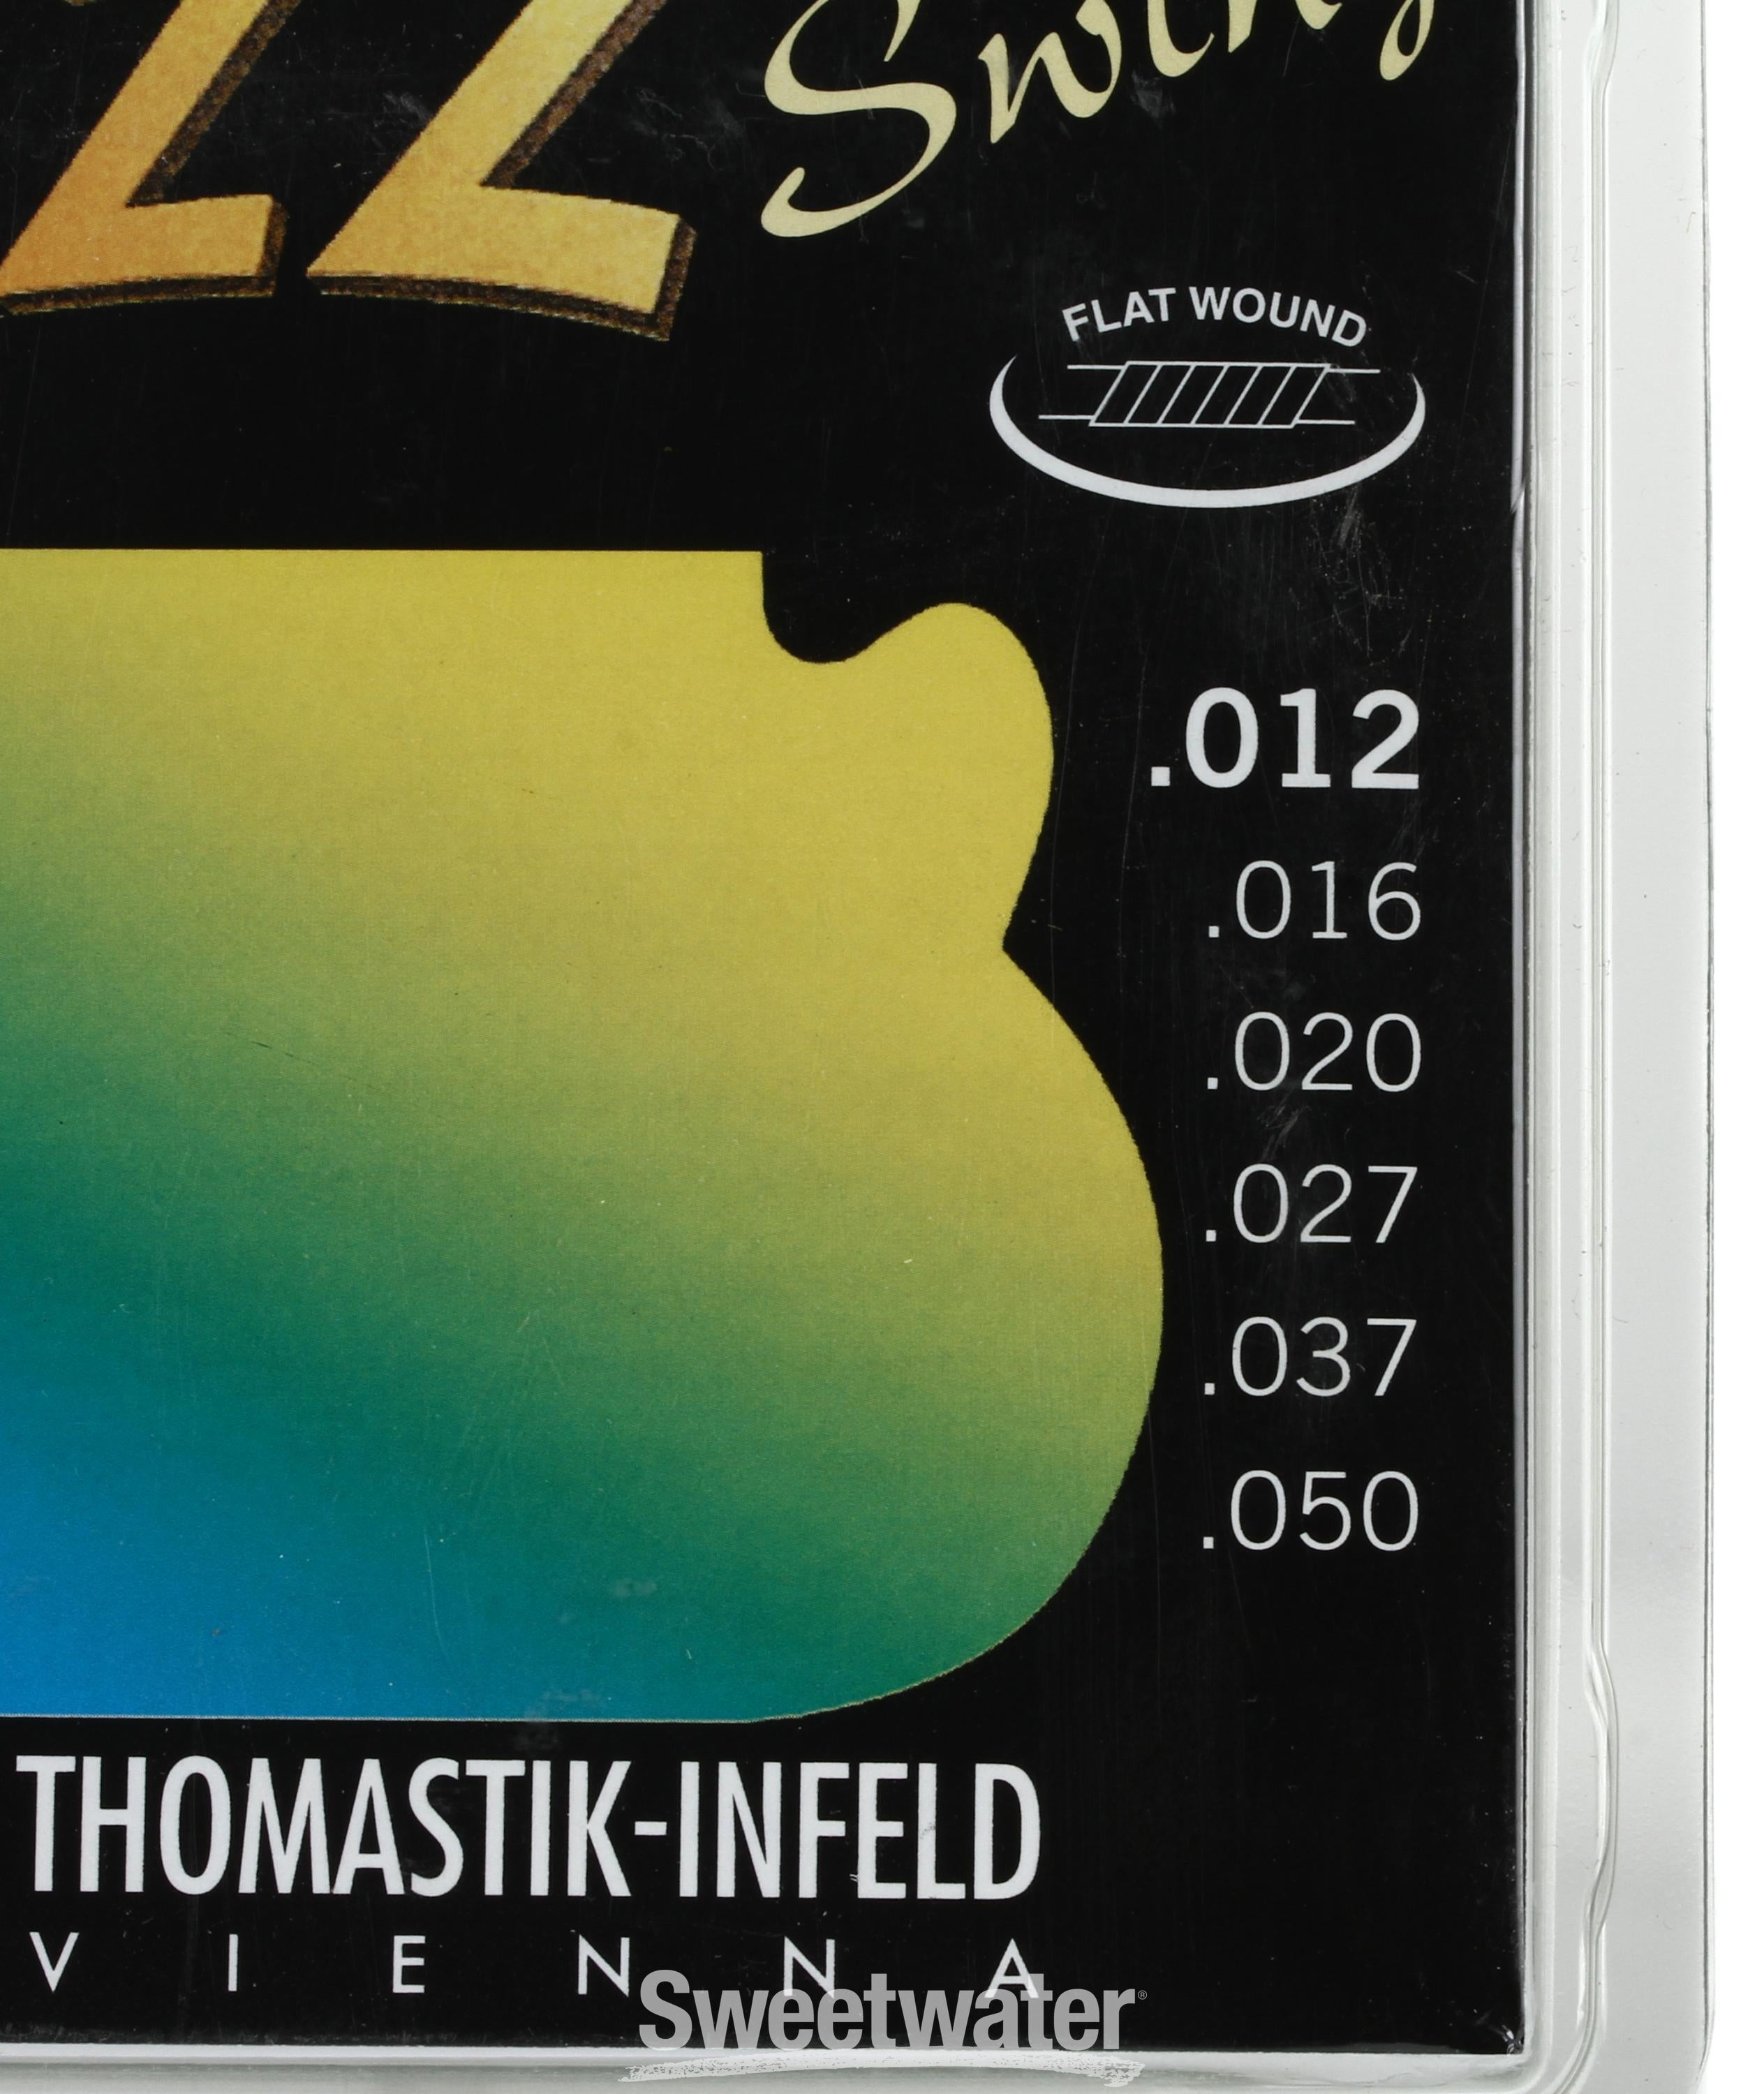 Thomastik-Infeld JS112 Jazz Swing Flatwound Electric Guitar Strings -  .012-.050 Medium Light